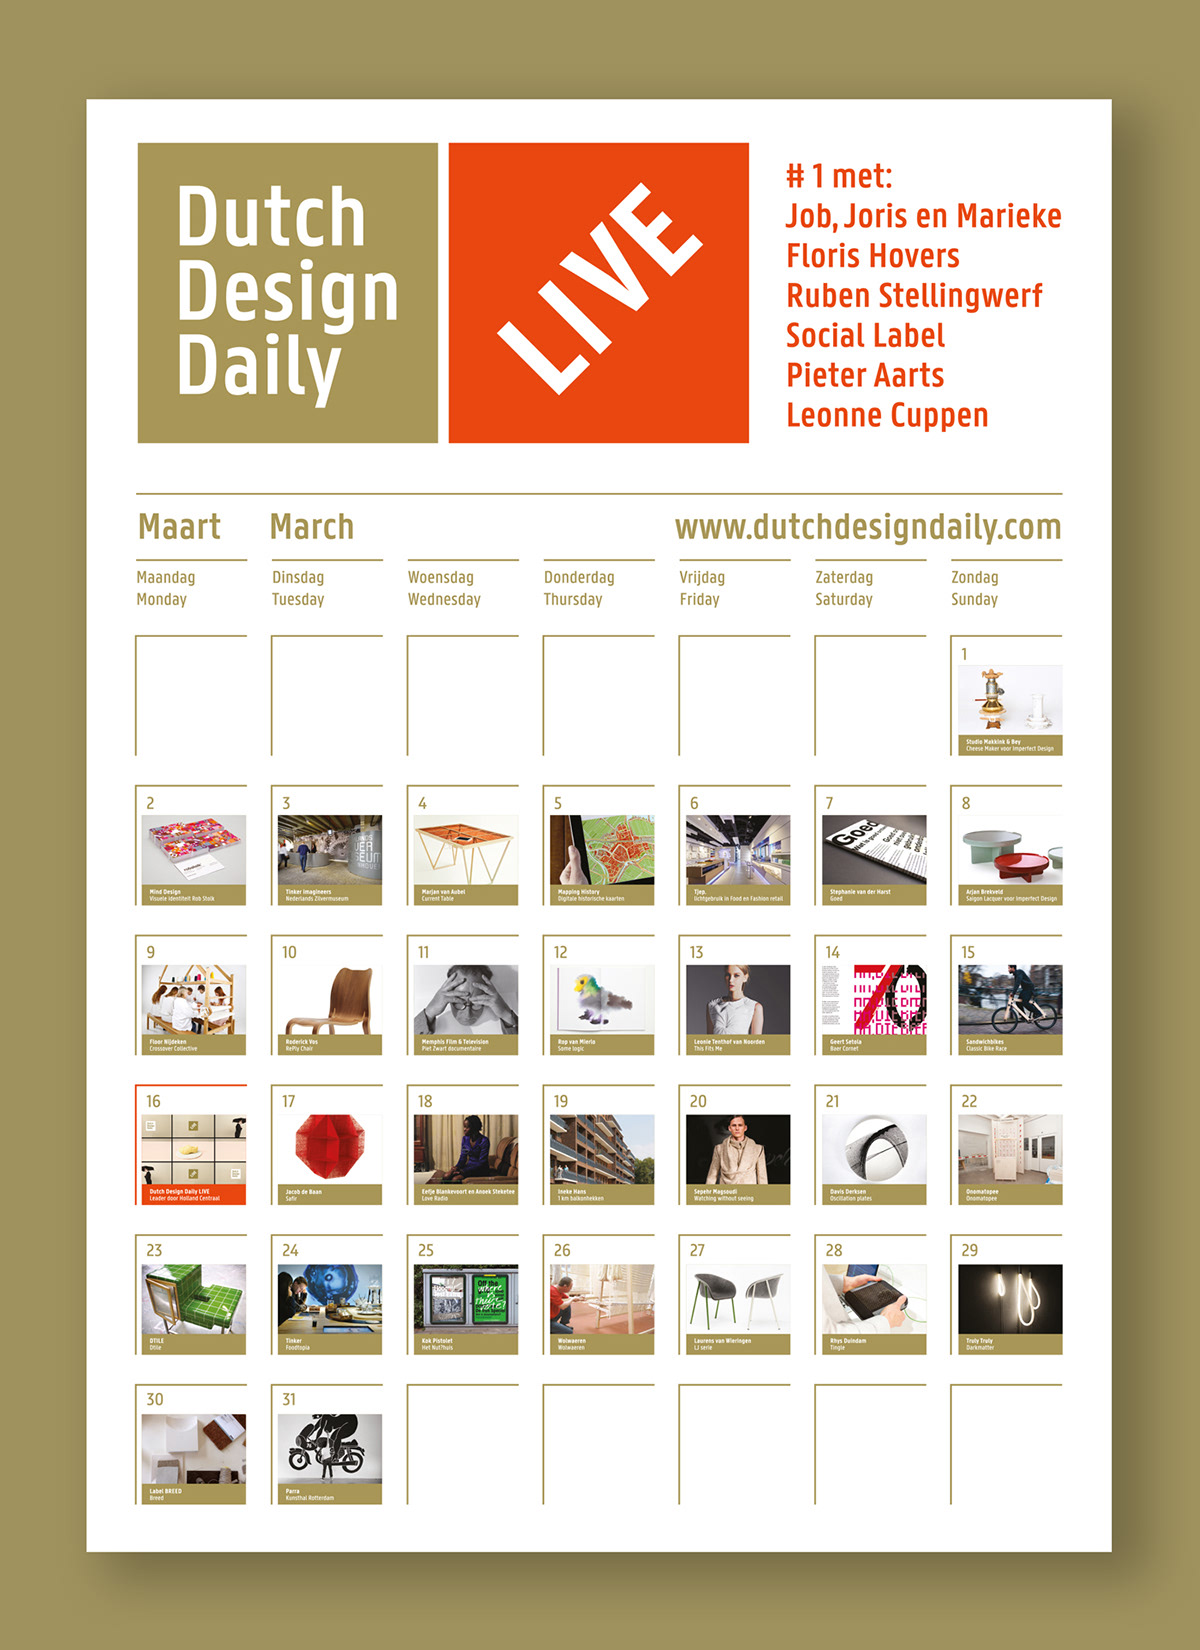 Event Dutch design social design designers digital design digital